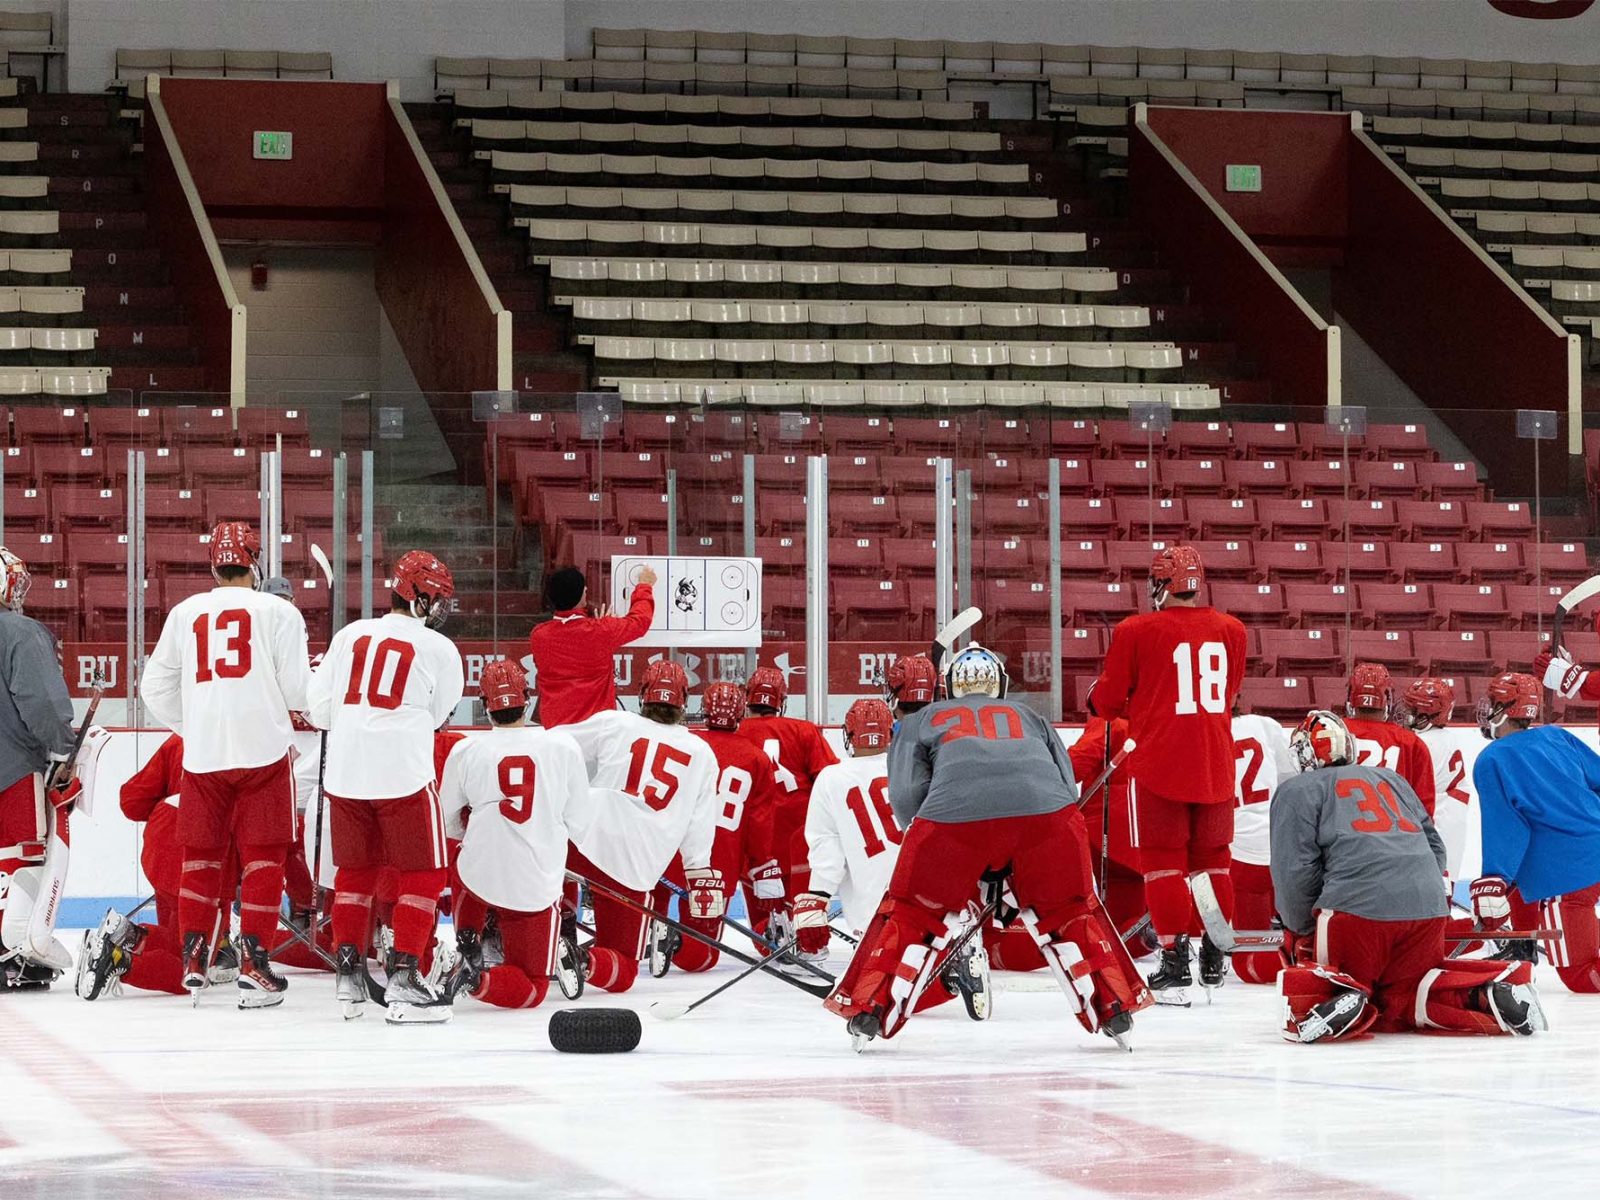 BU Men's Ice Hockey Opens Season under New Leadership, BU Today